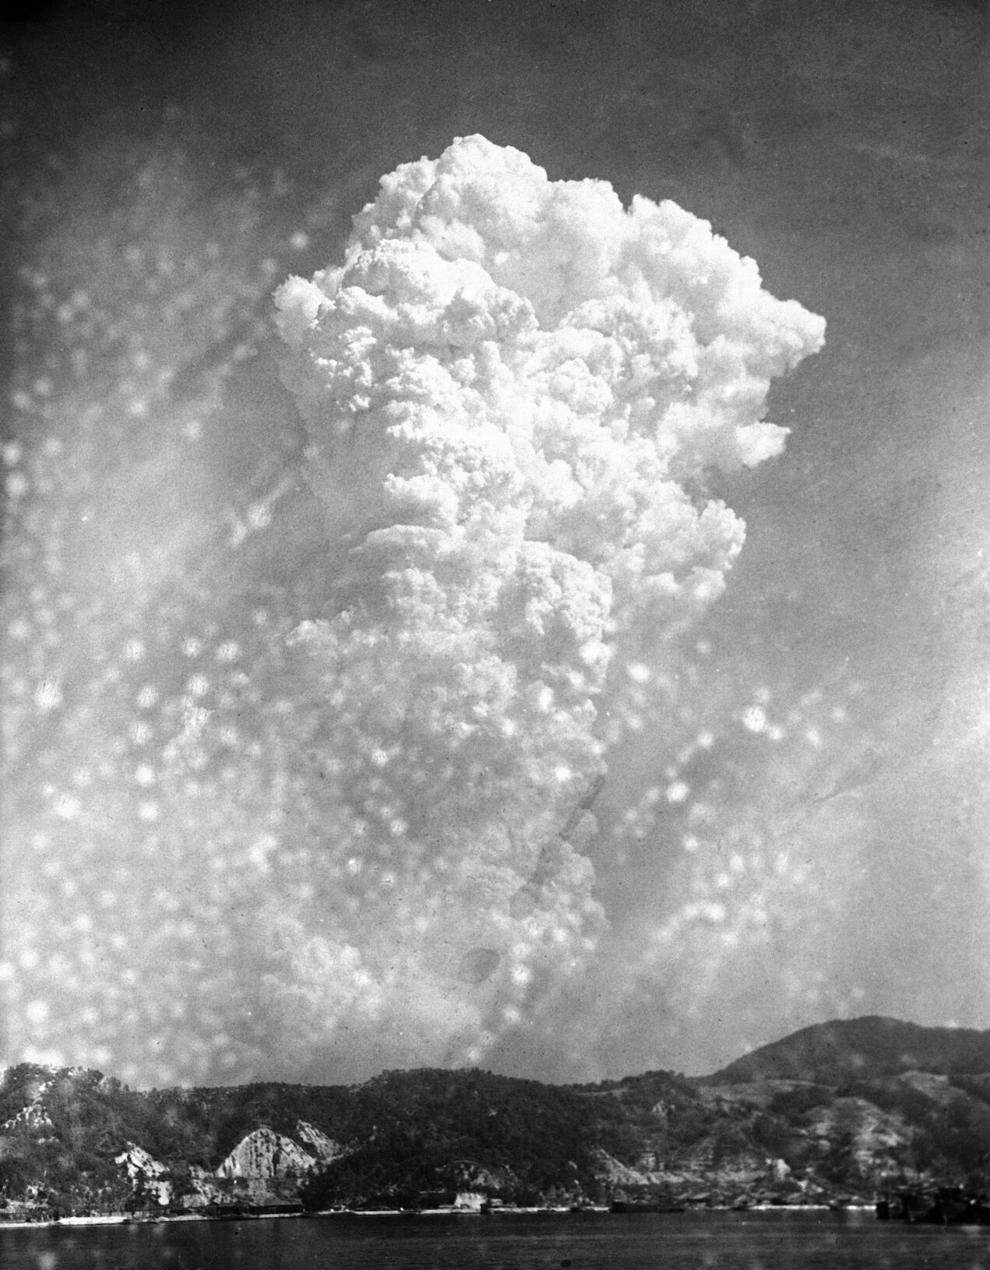 Photos: See historic photos of the Hiroshima atomic bombing 75 years ago